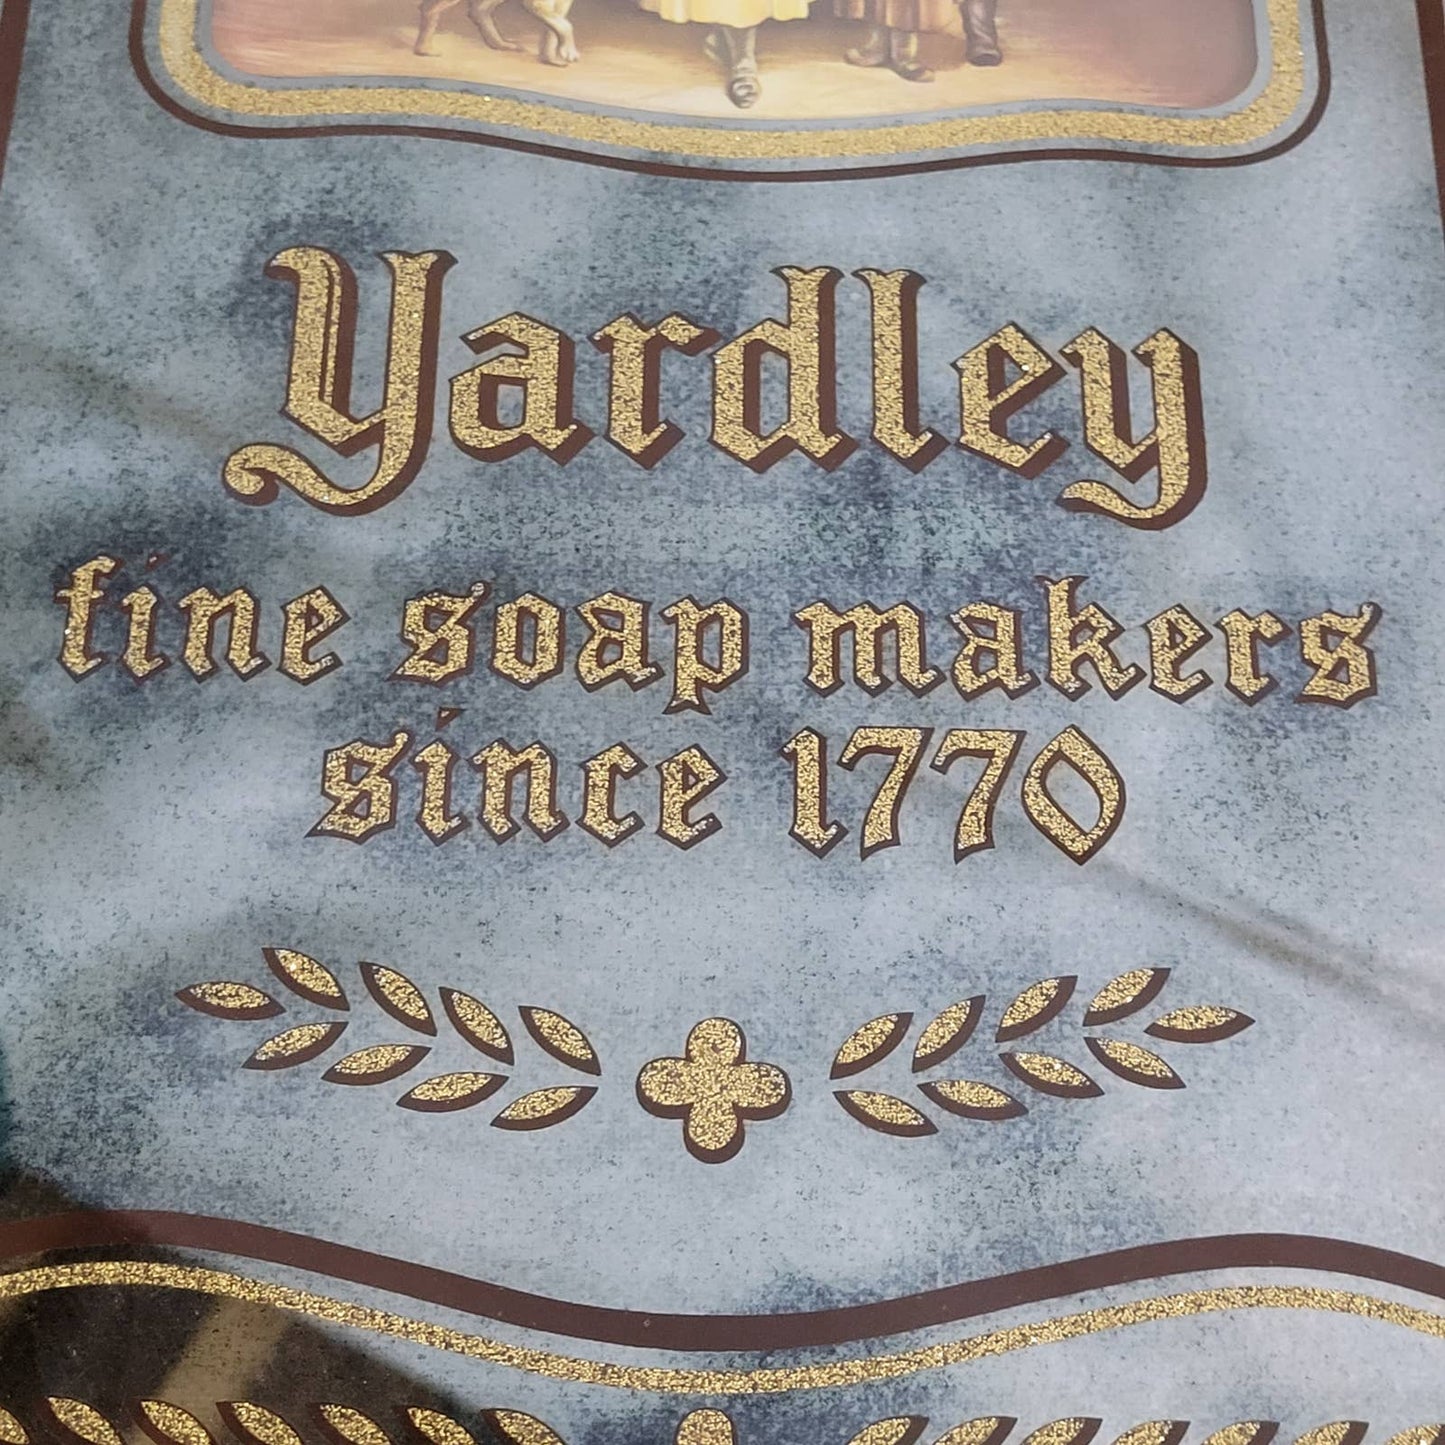 Vintage Yardley Fine Soap Maker Mirror